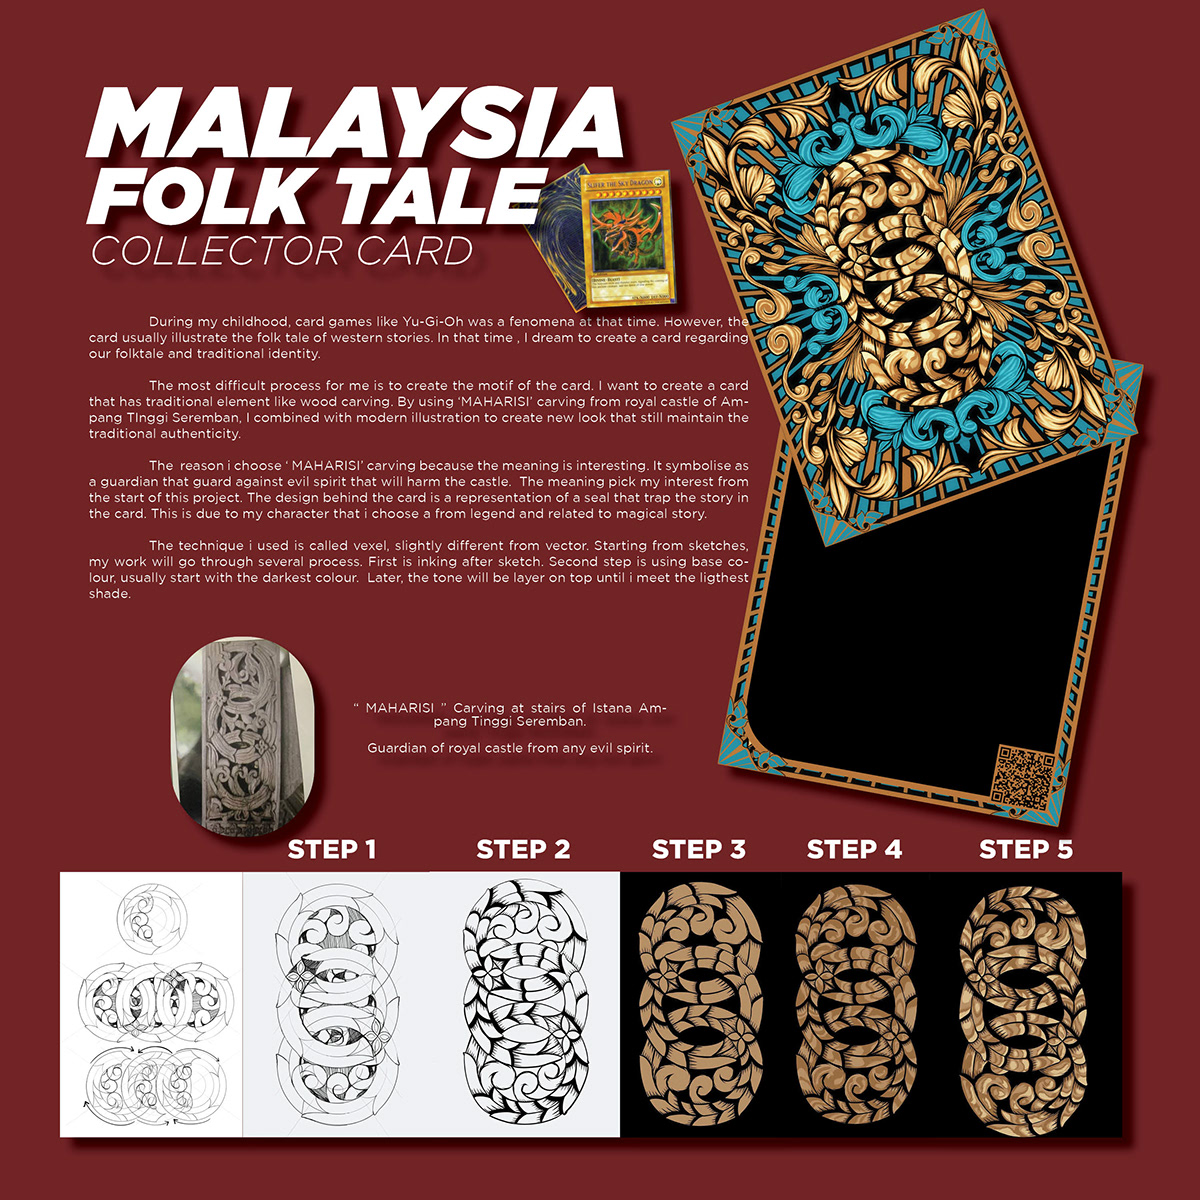 card design Folklore folklore art folklore illustration illustration card illustration card design